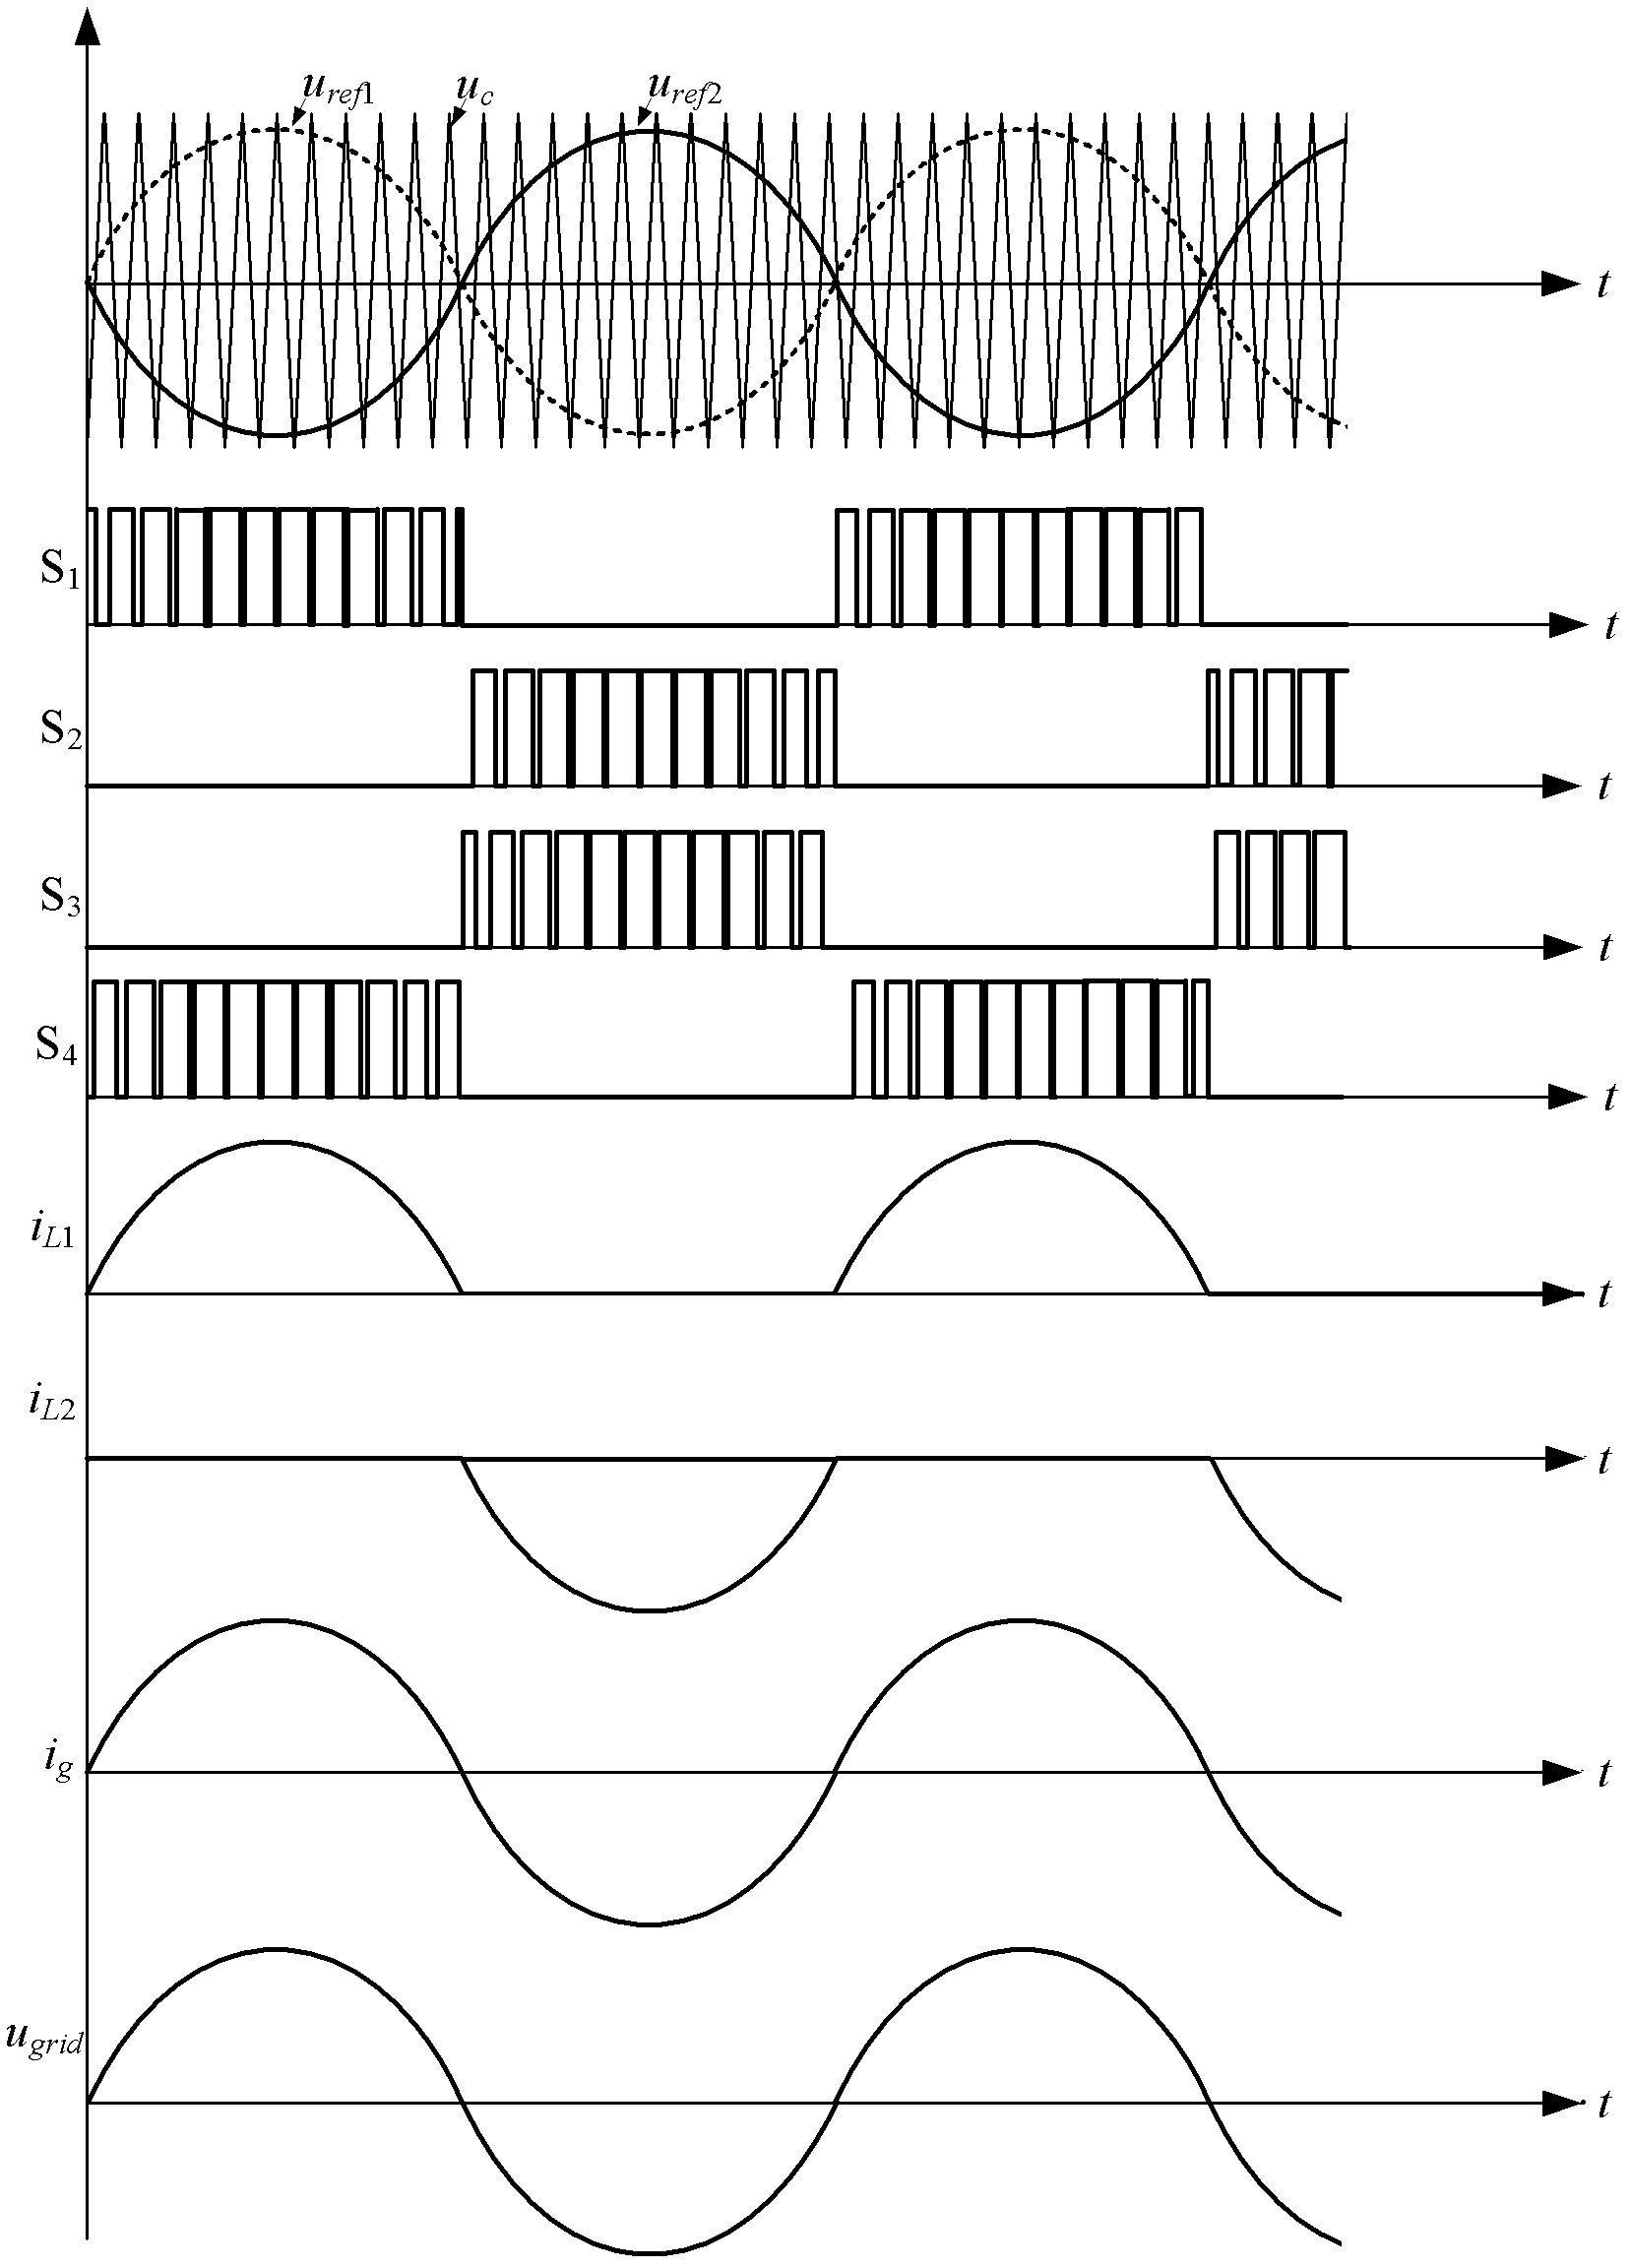 Control method for dual-bucking full-bridge grid-connected inverter